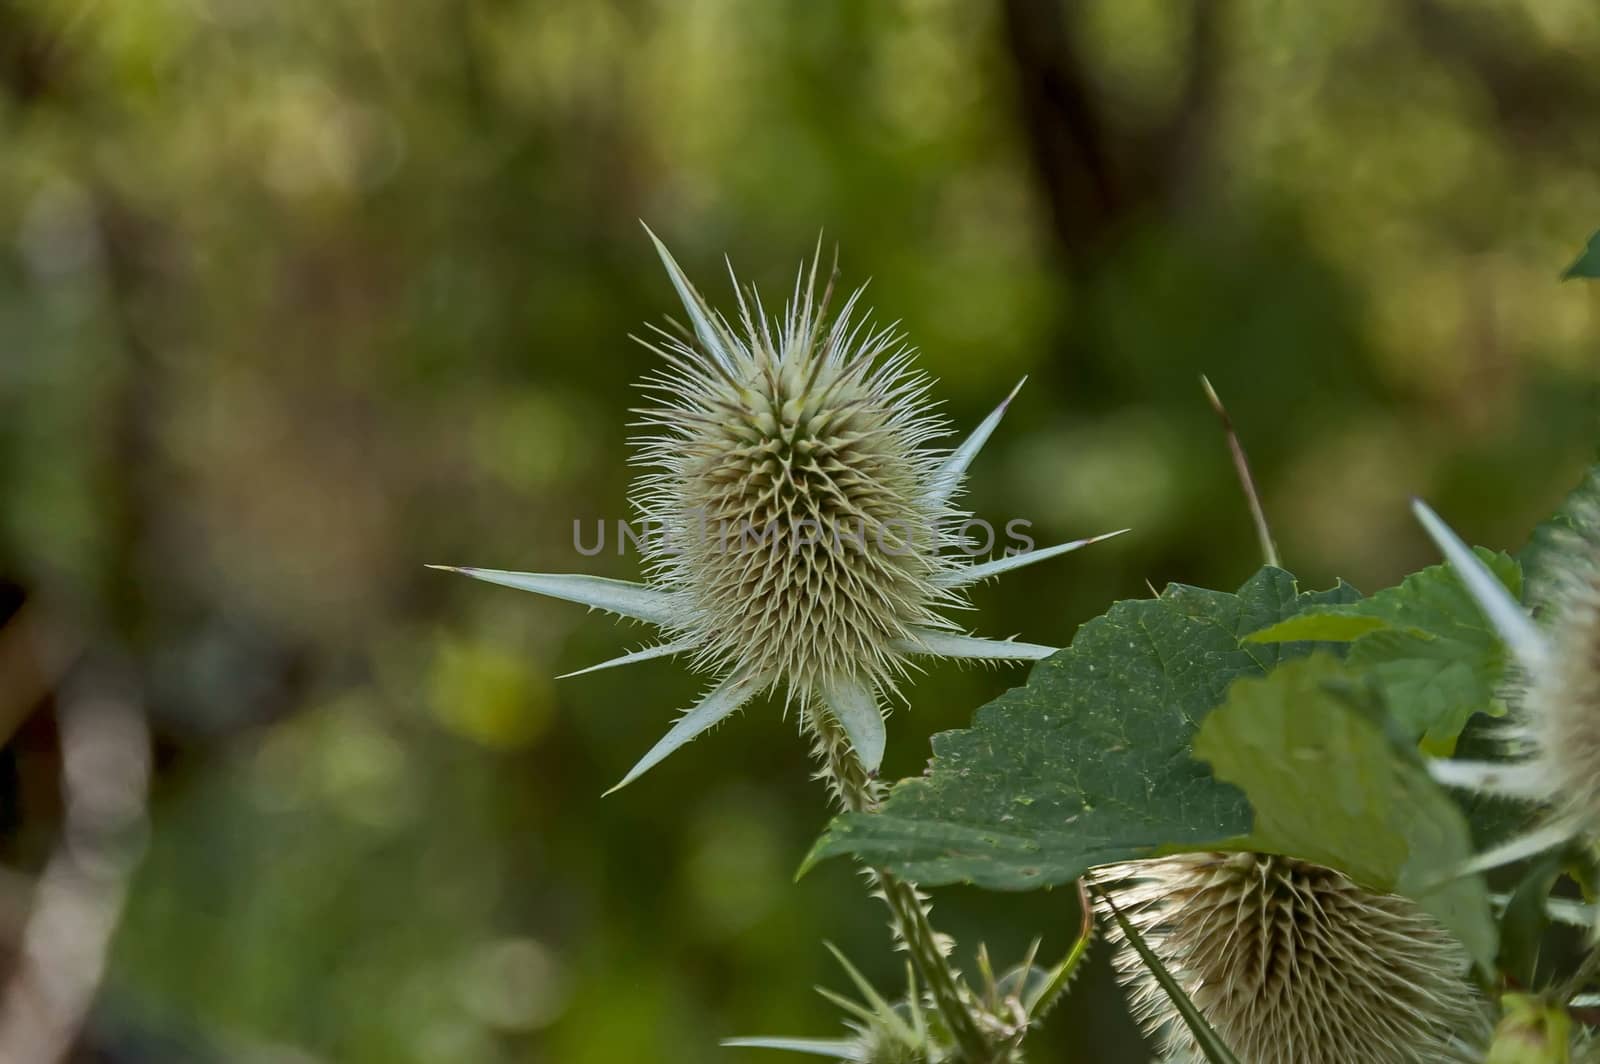 Wild teasel, Wild thistle or Dipsacus fullonum, a species of flowering plant from Eurasia, Sredna gora mountain, Bulgaria